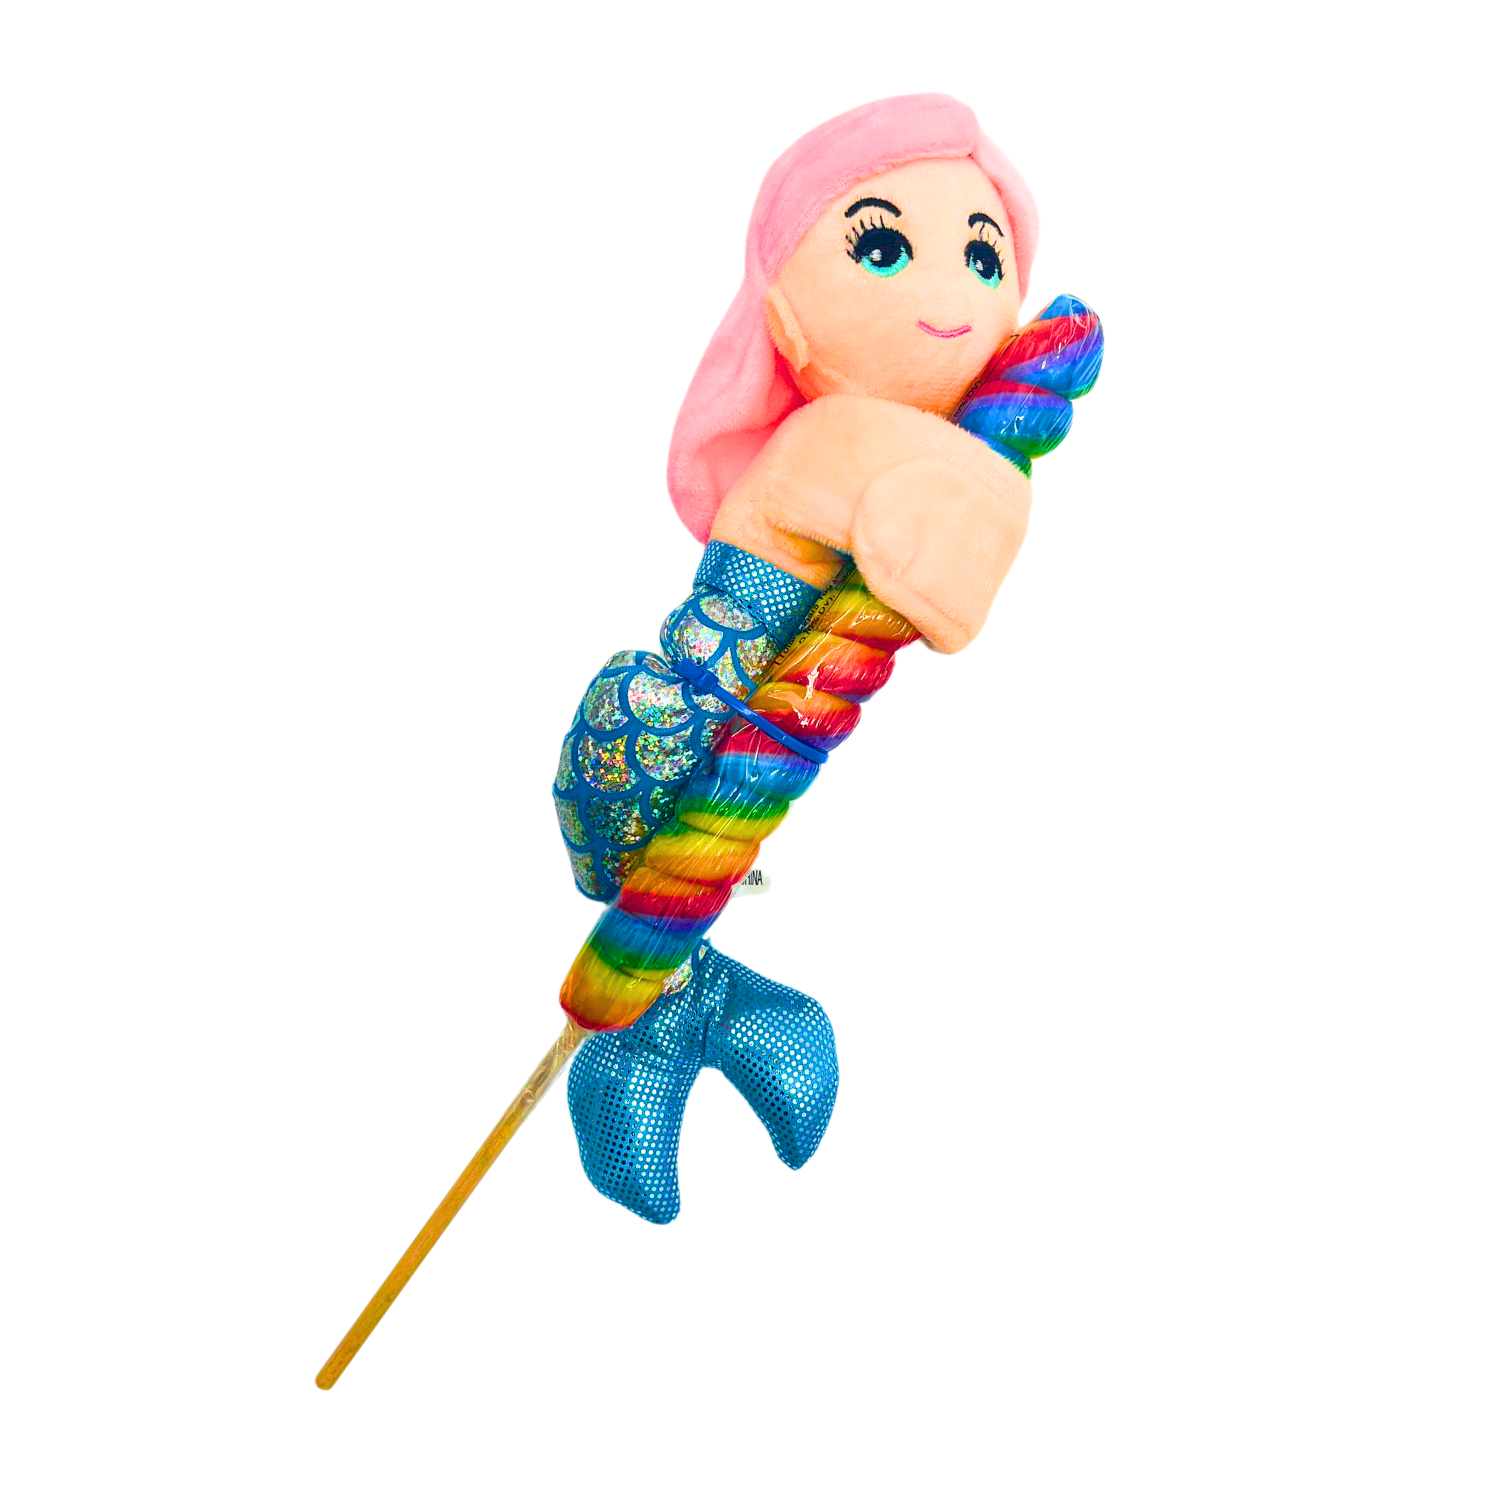 Mermaid Slap Bracelet With Lollipop